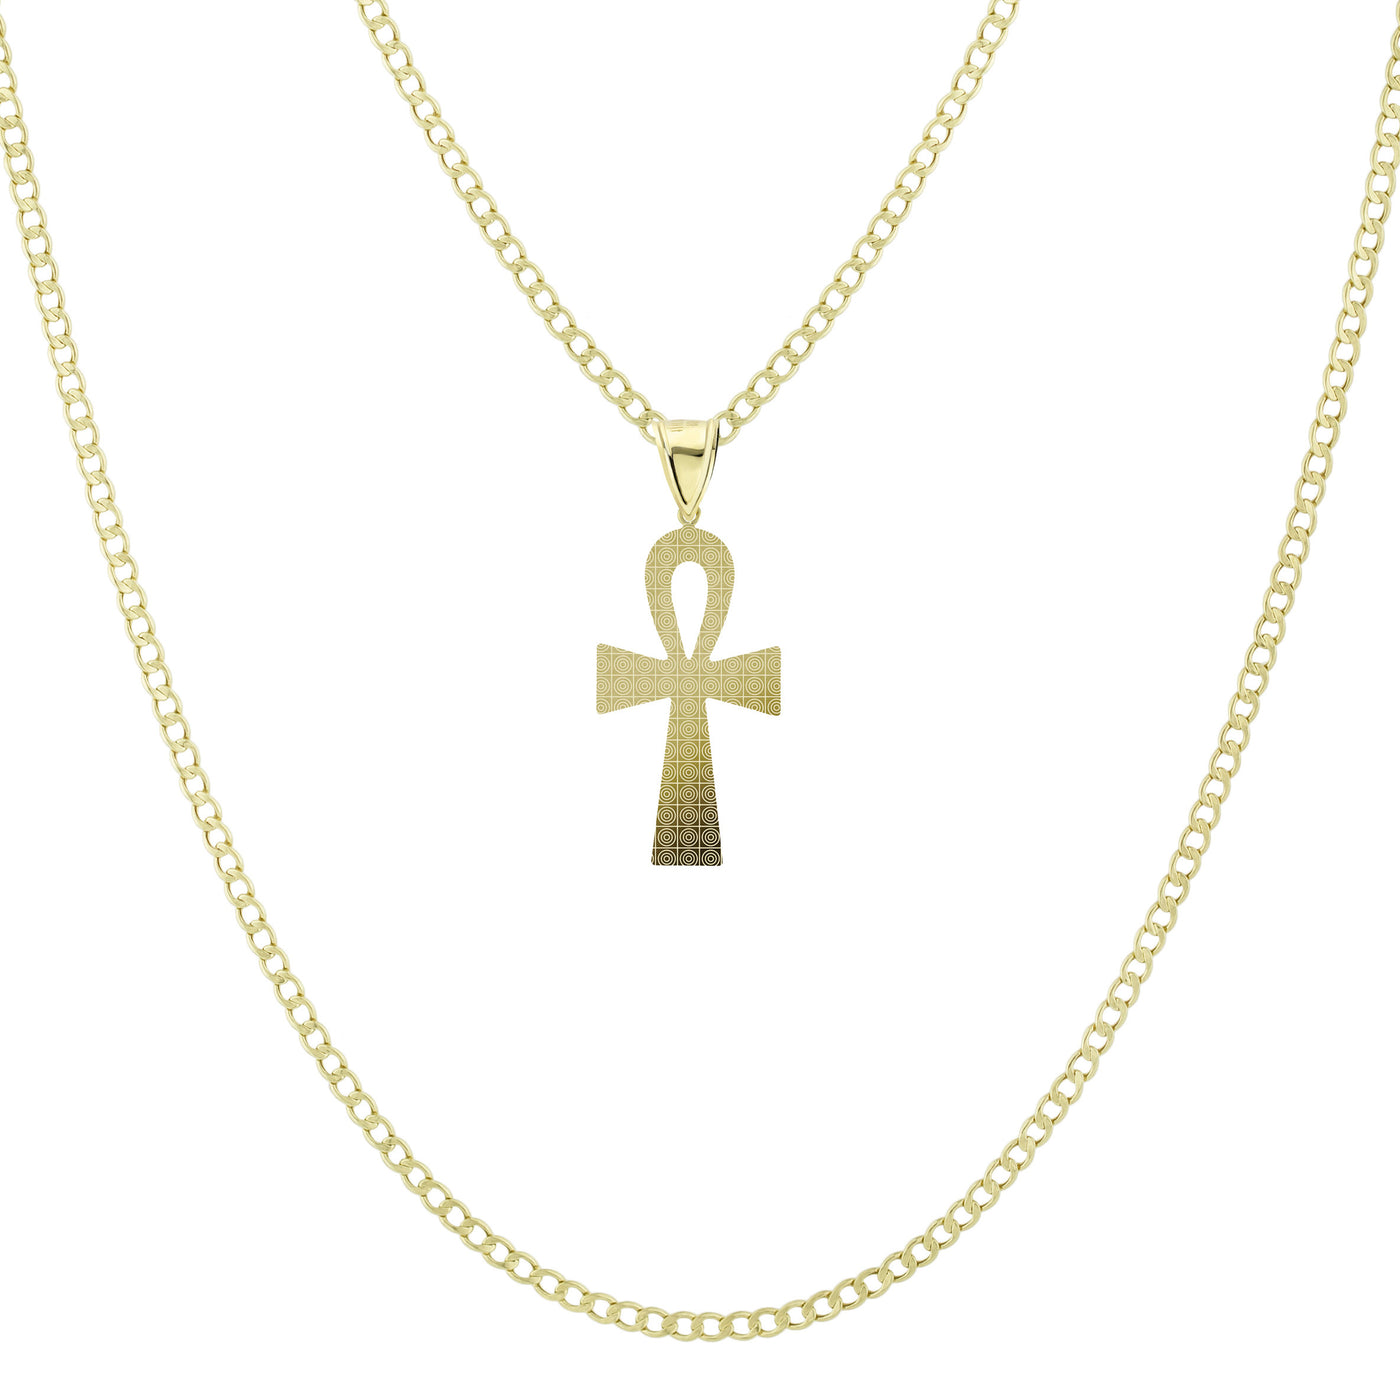 1 1/2" Diamond Cut Ankh Cross Pendant & Chain Necklace Set 14K Yellow Gold